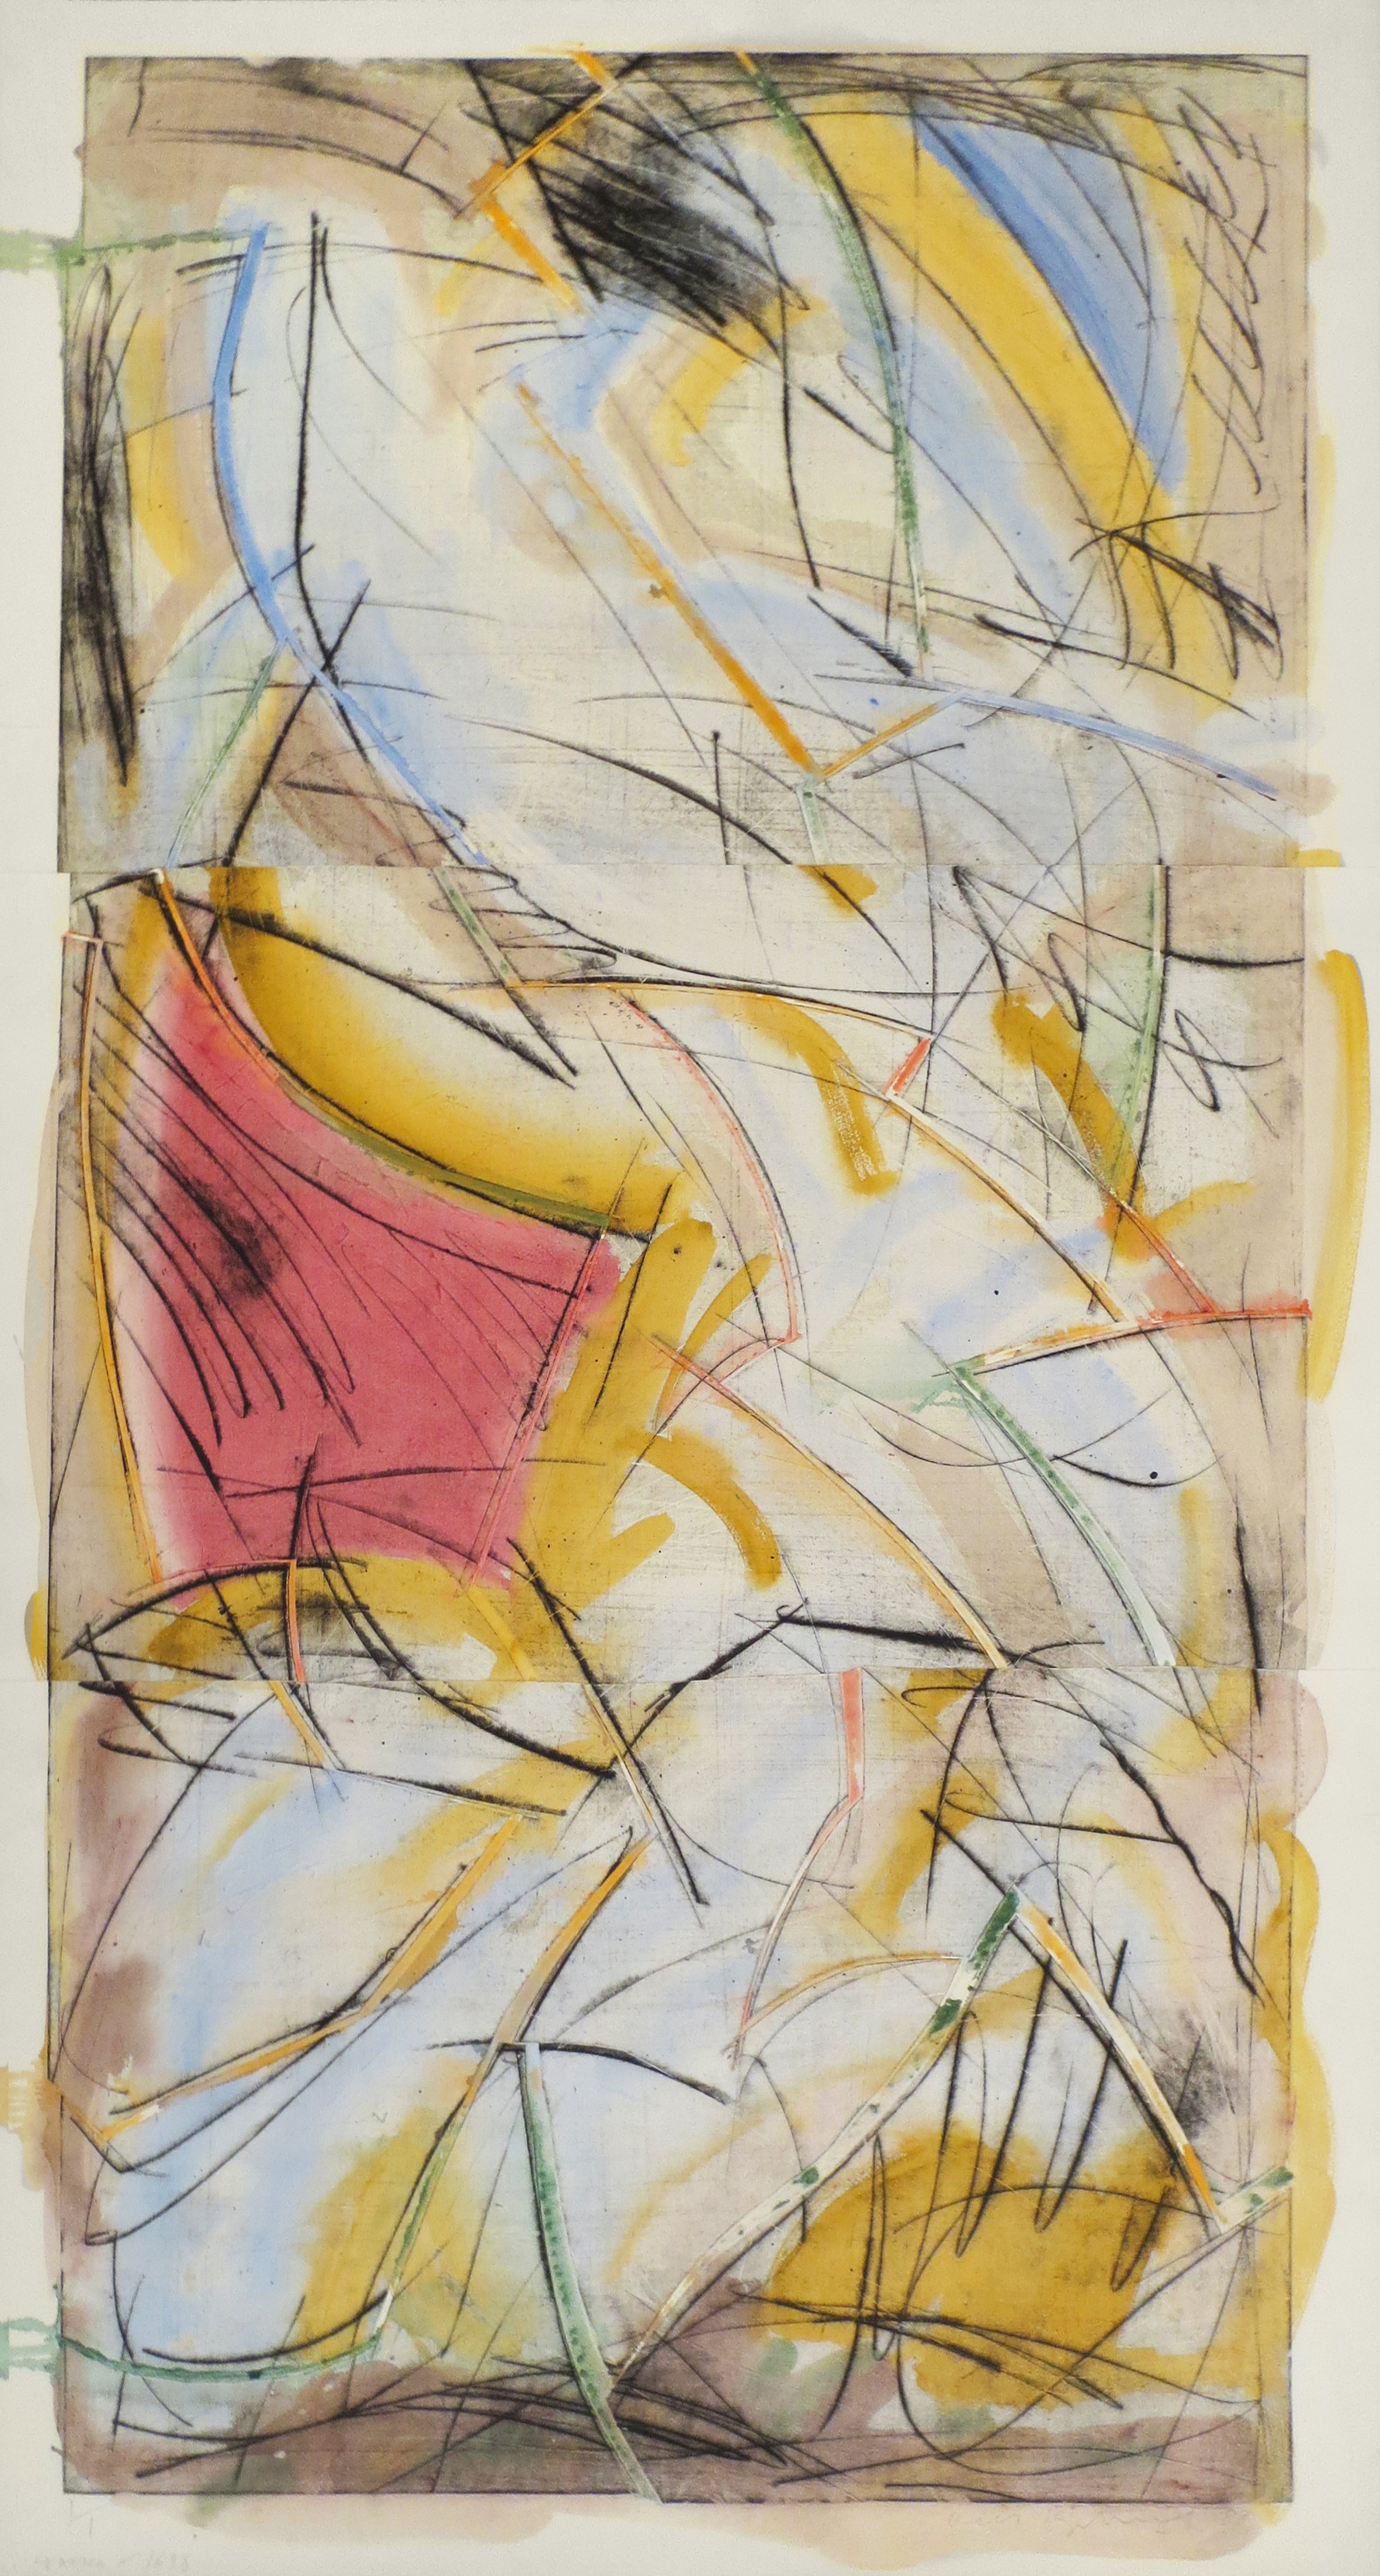 Composition, Plate 1698, 1988